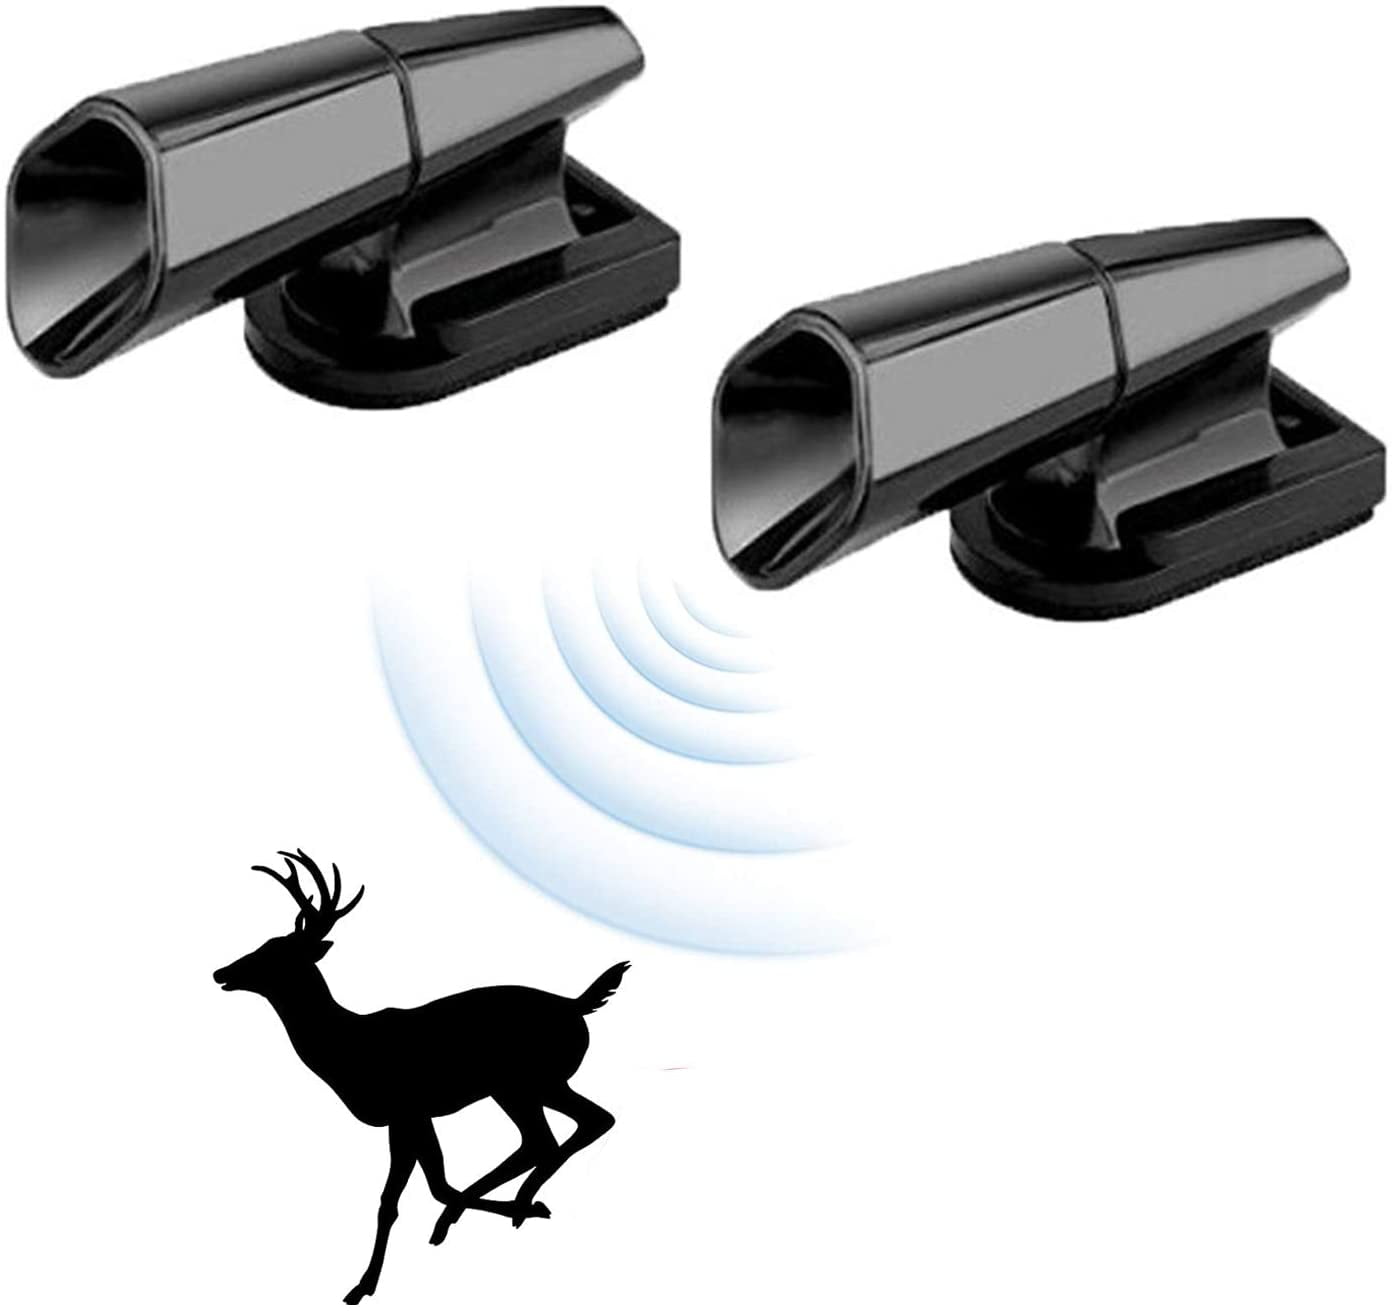 Auto Drive Horn Type Car Deer Warning Whistle, Black, Model 7306